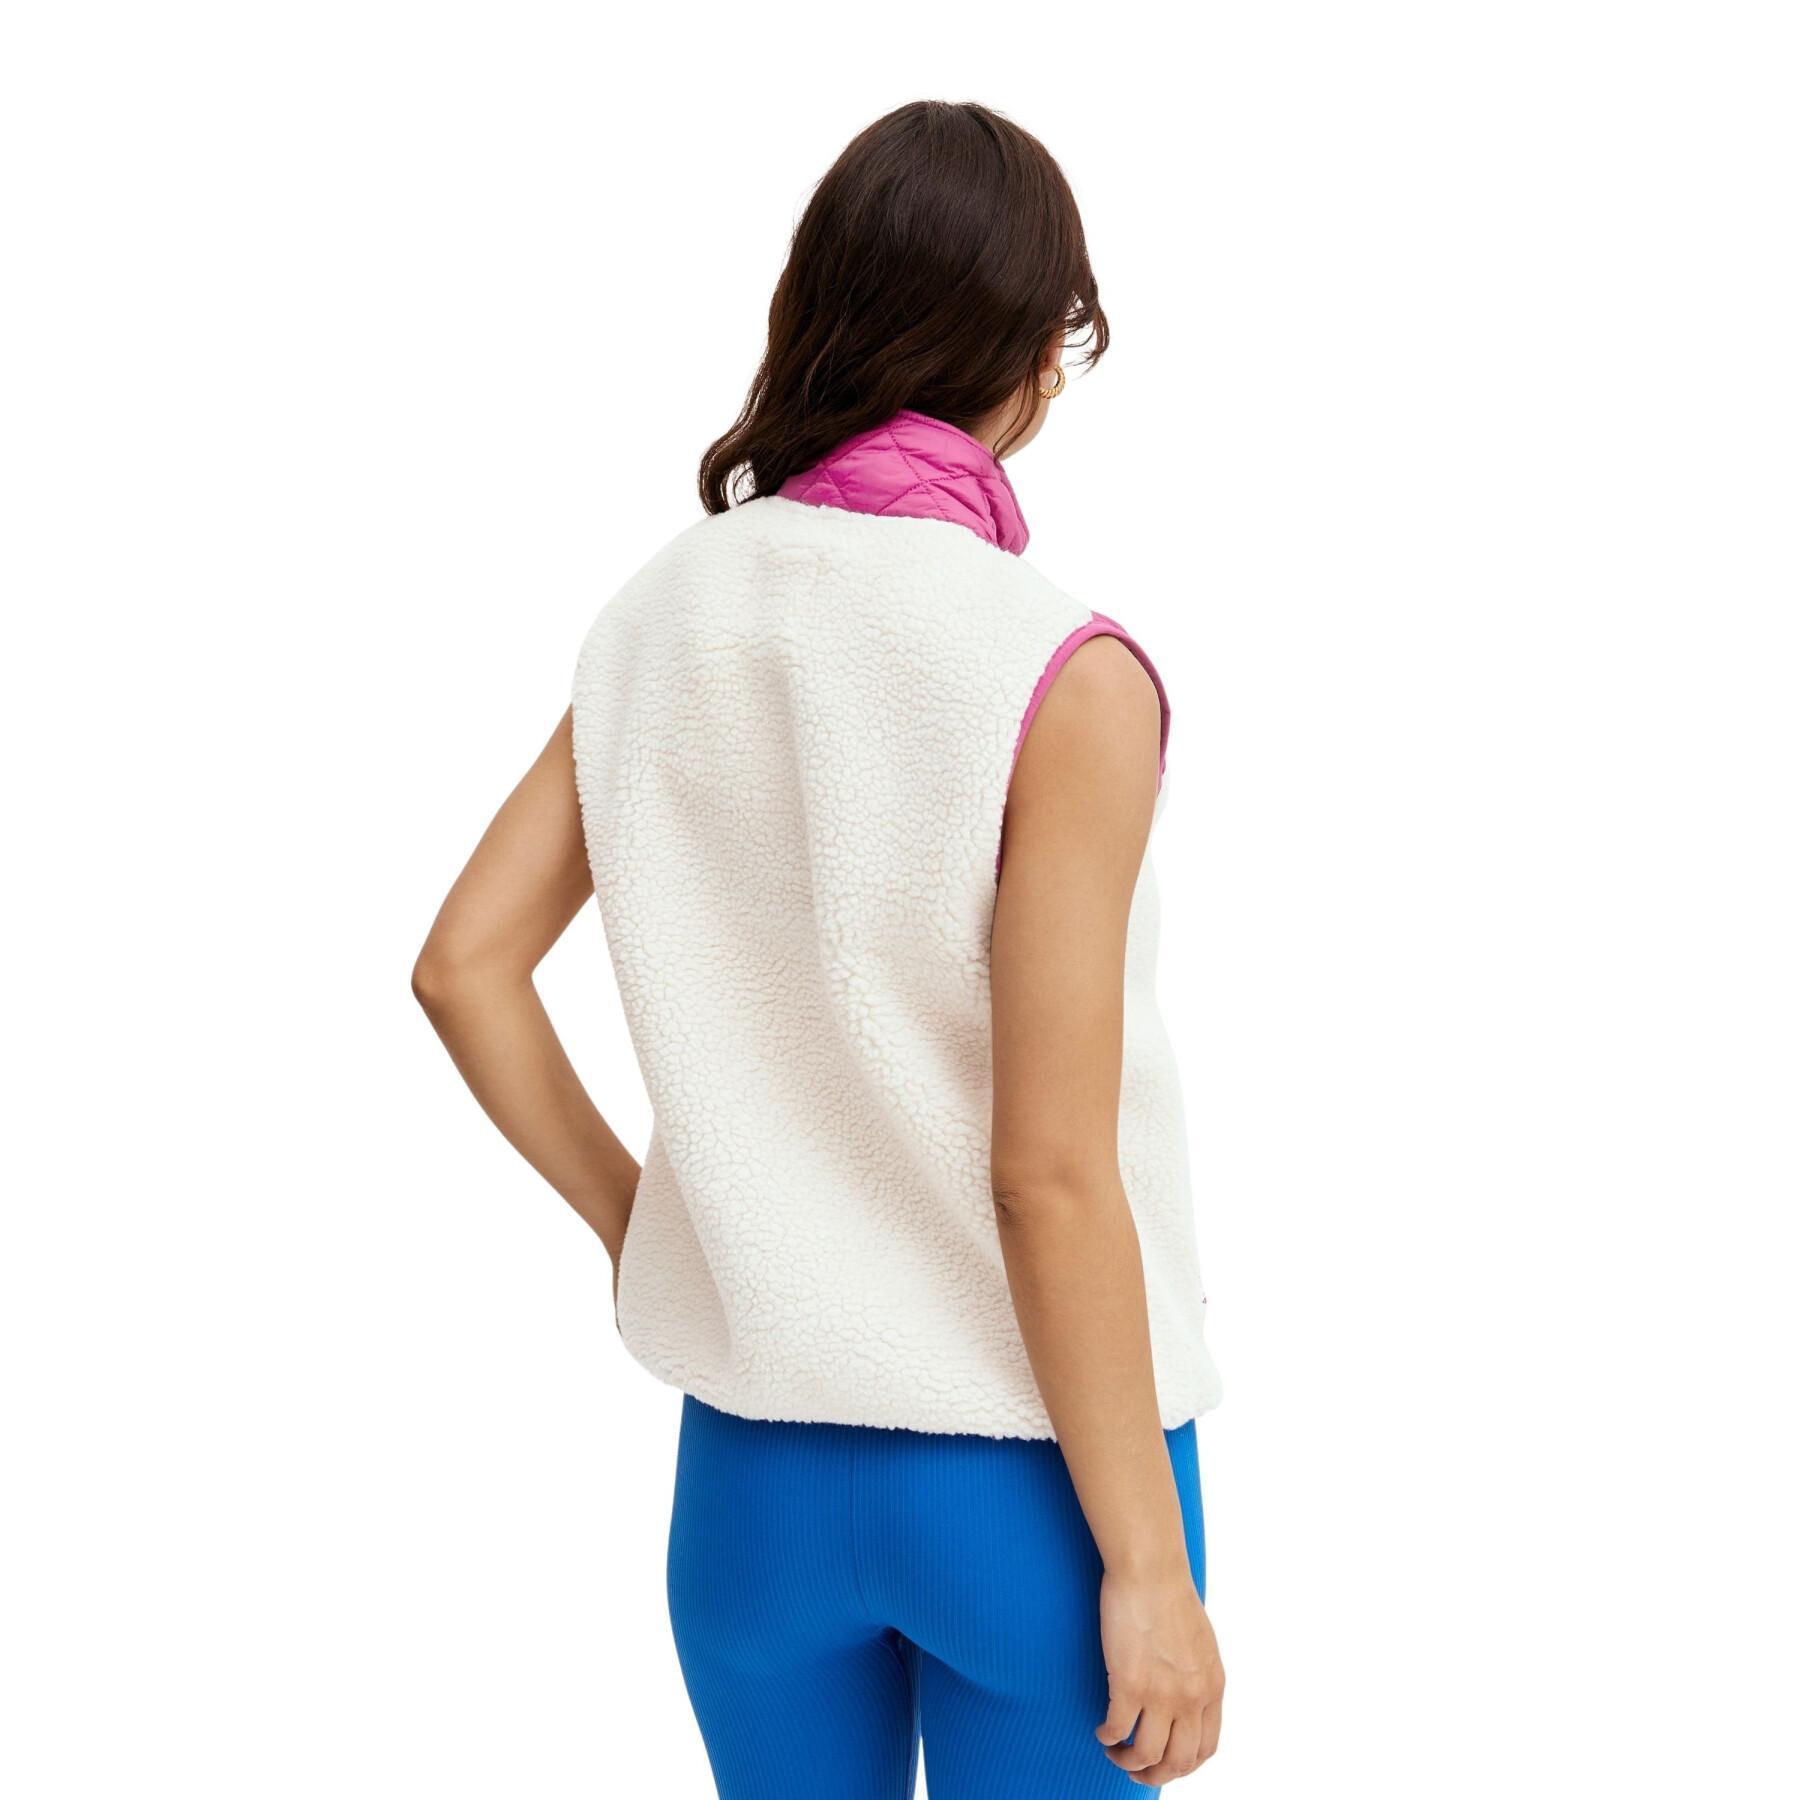 Women's sleeveless fleece TheJoggConcept Jcberri 2